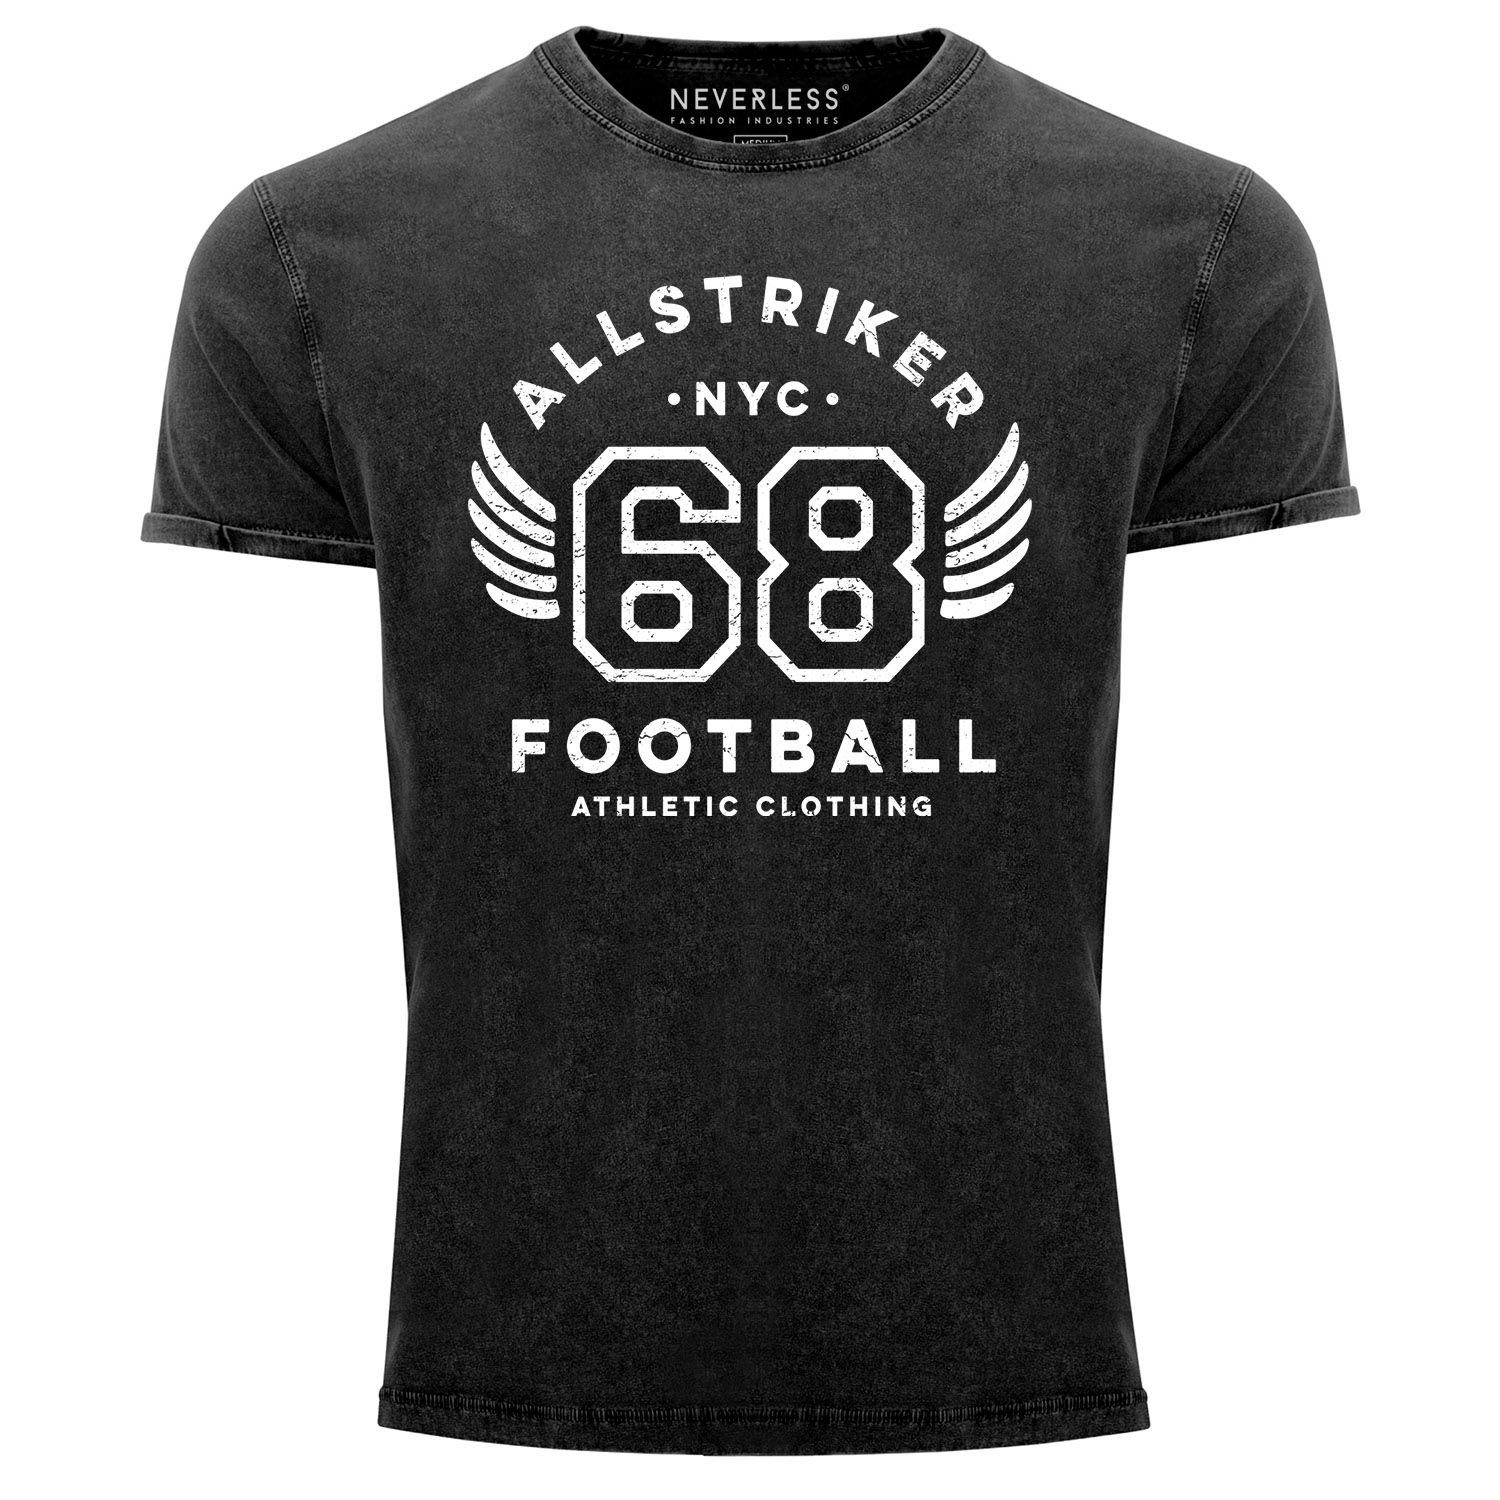 Neverless Print-Shirt Herren Vintage Shirt College NYC 68 Football Athletic Clothing Vintage Printshirt T-Shirt Used Look Slim Fit Neverless® mit Print schwarz